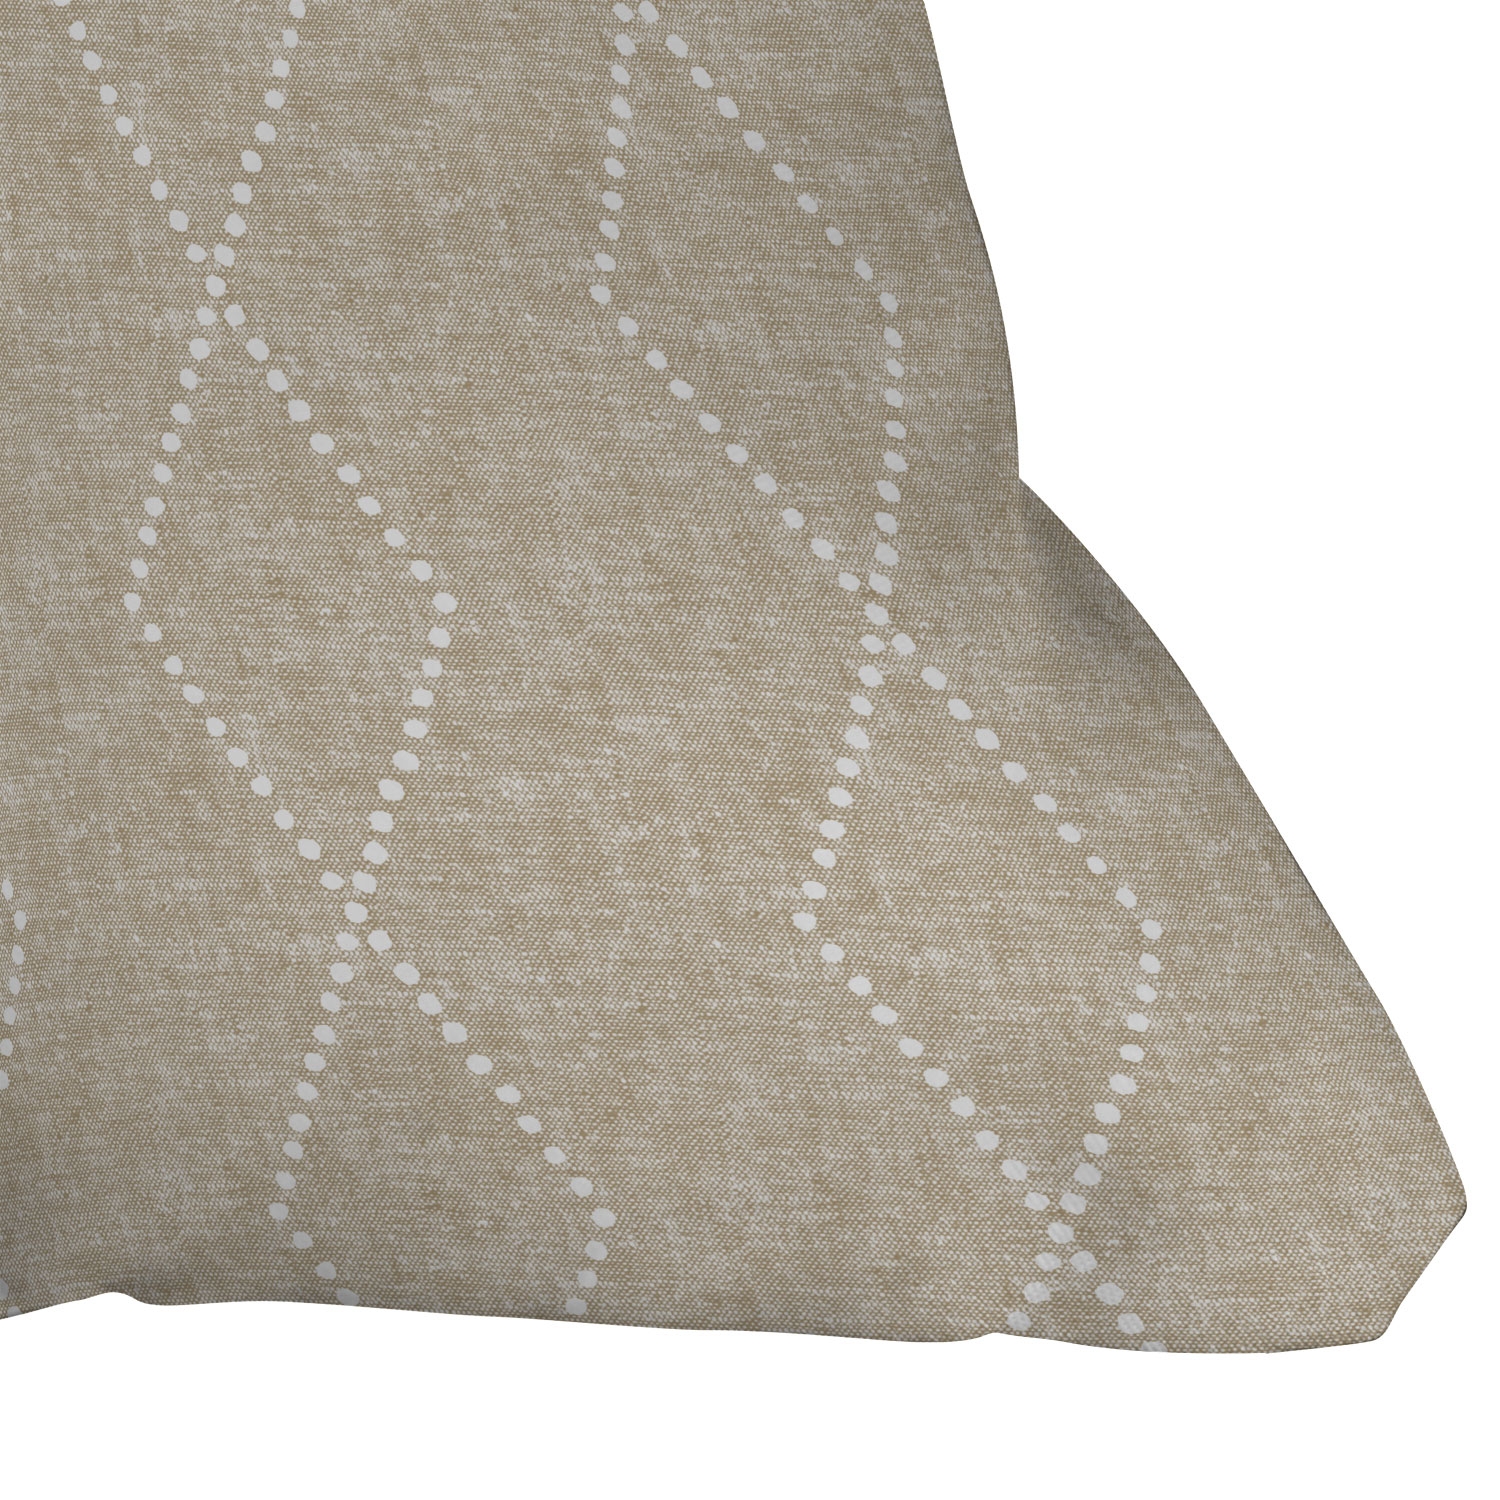 Geometric Boho Diamonds by Little Arrow Design Co - Outdoor Throw Pillow 26" x 26" - Image 2